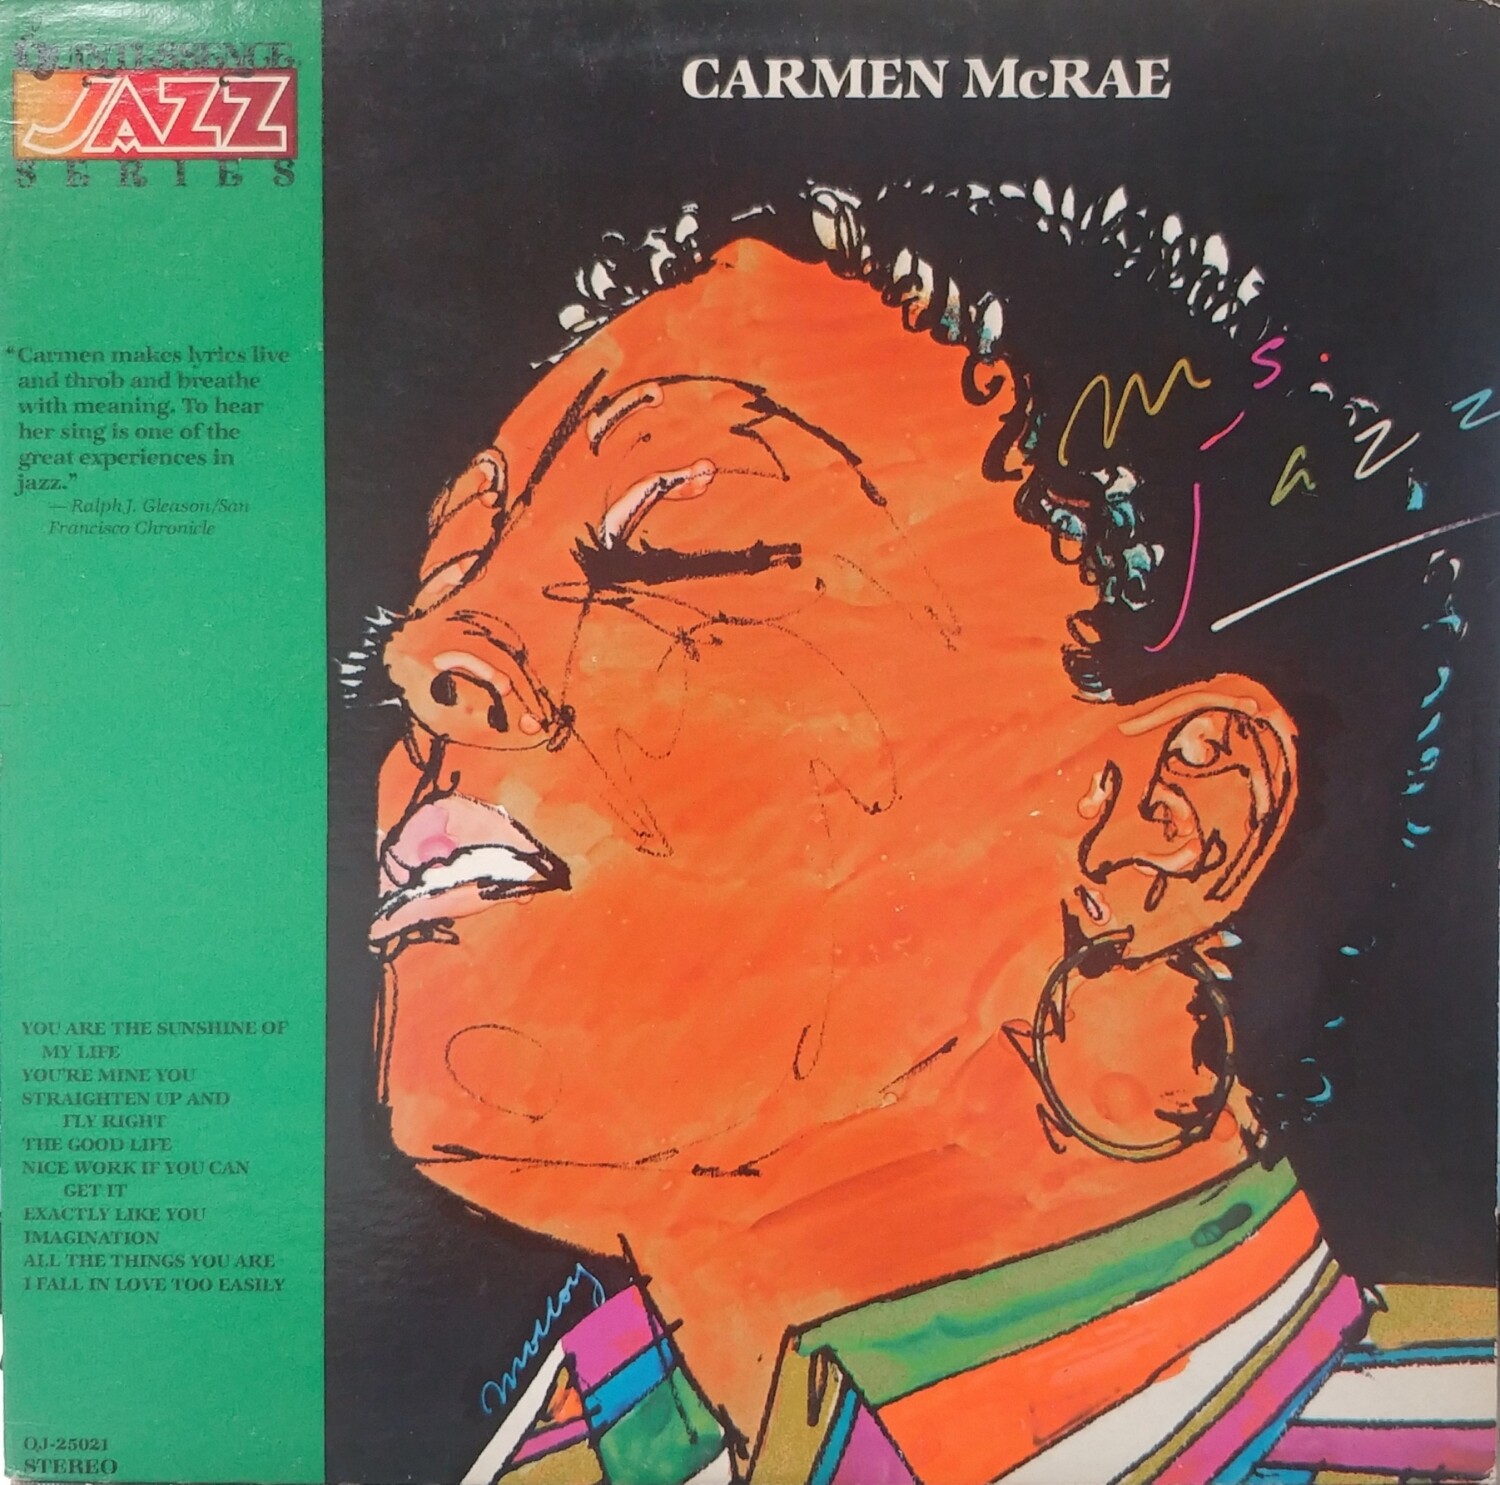 Carmen McRae - Ms. Jazz